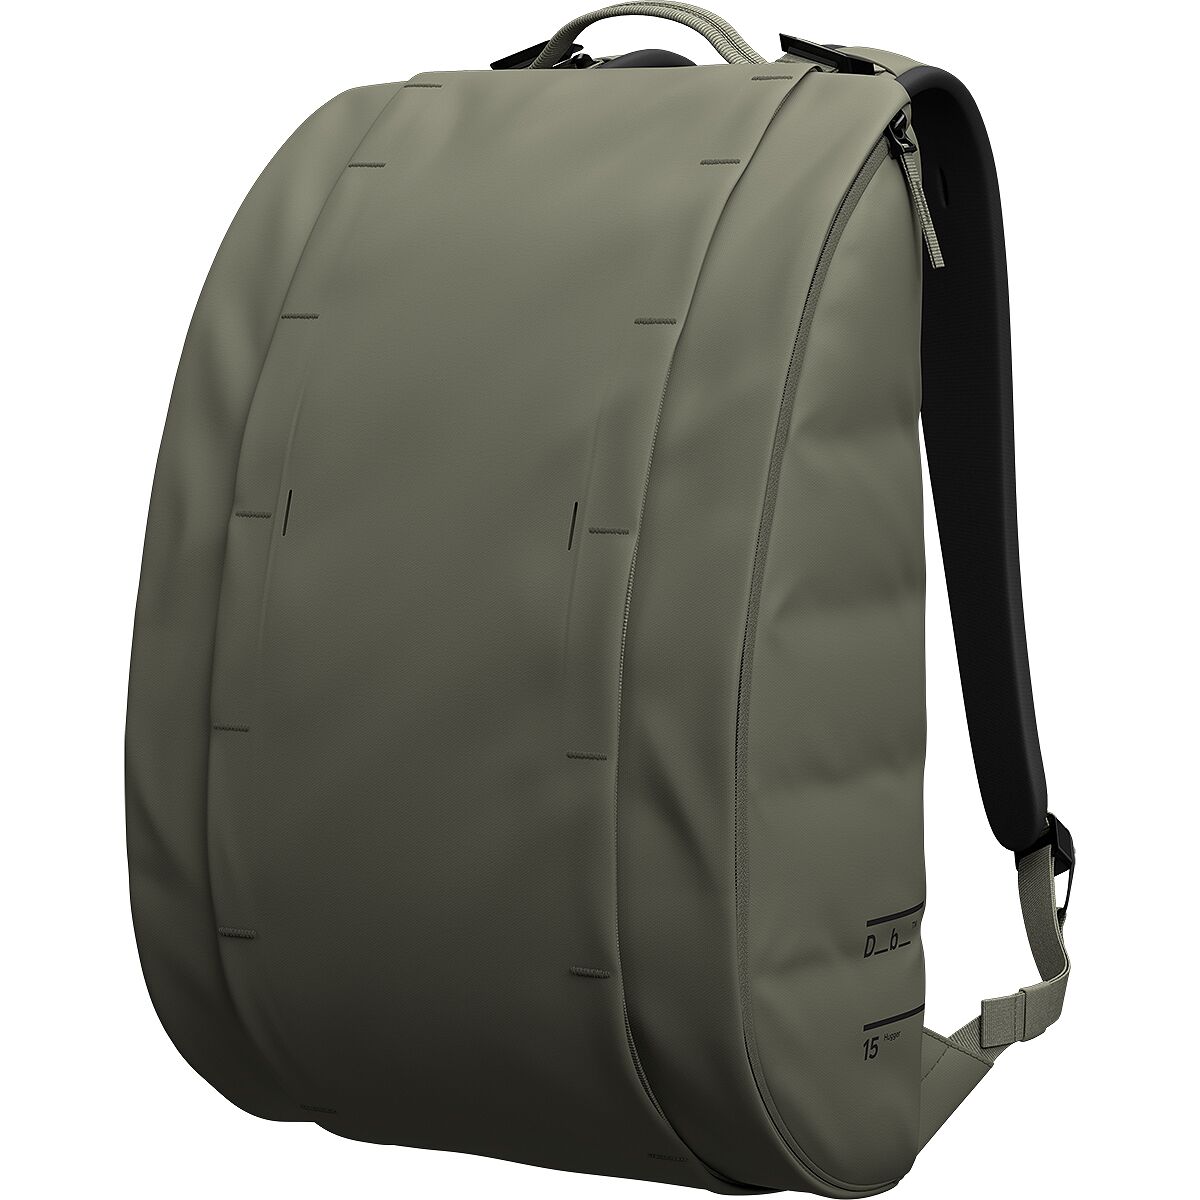 Db Hugger Base 15L Backpack